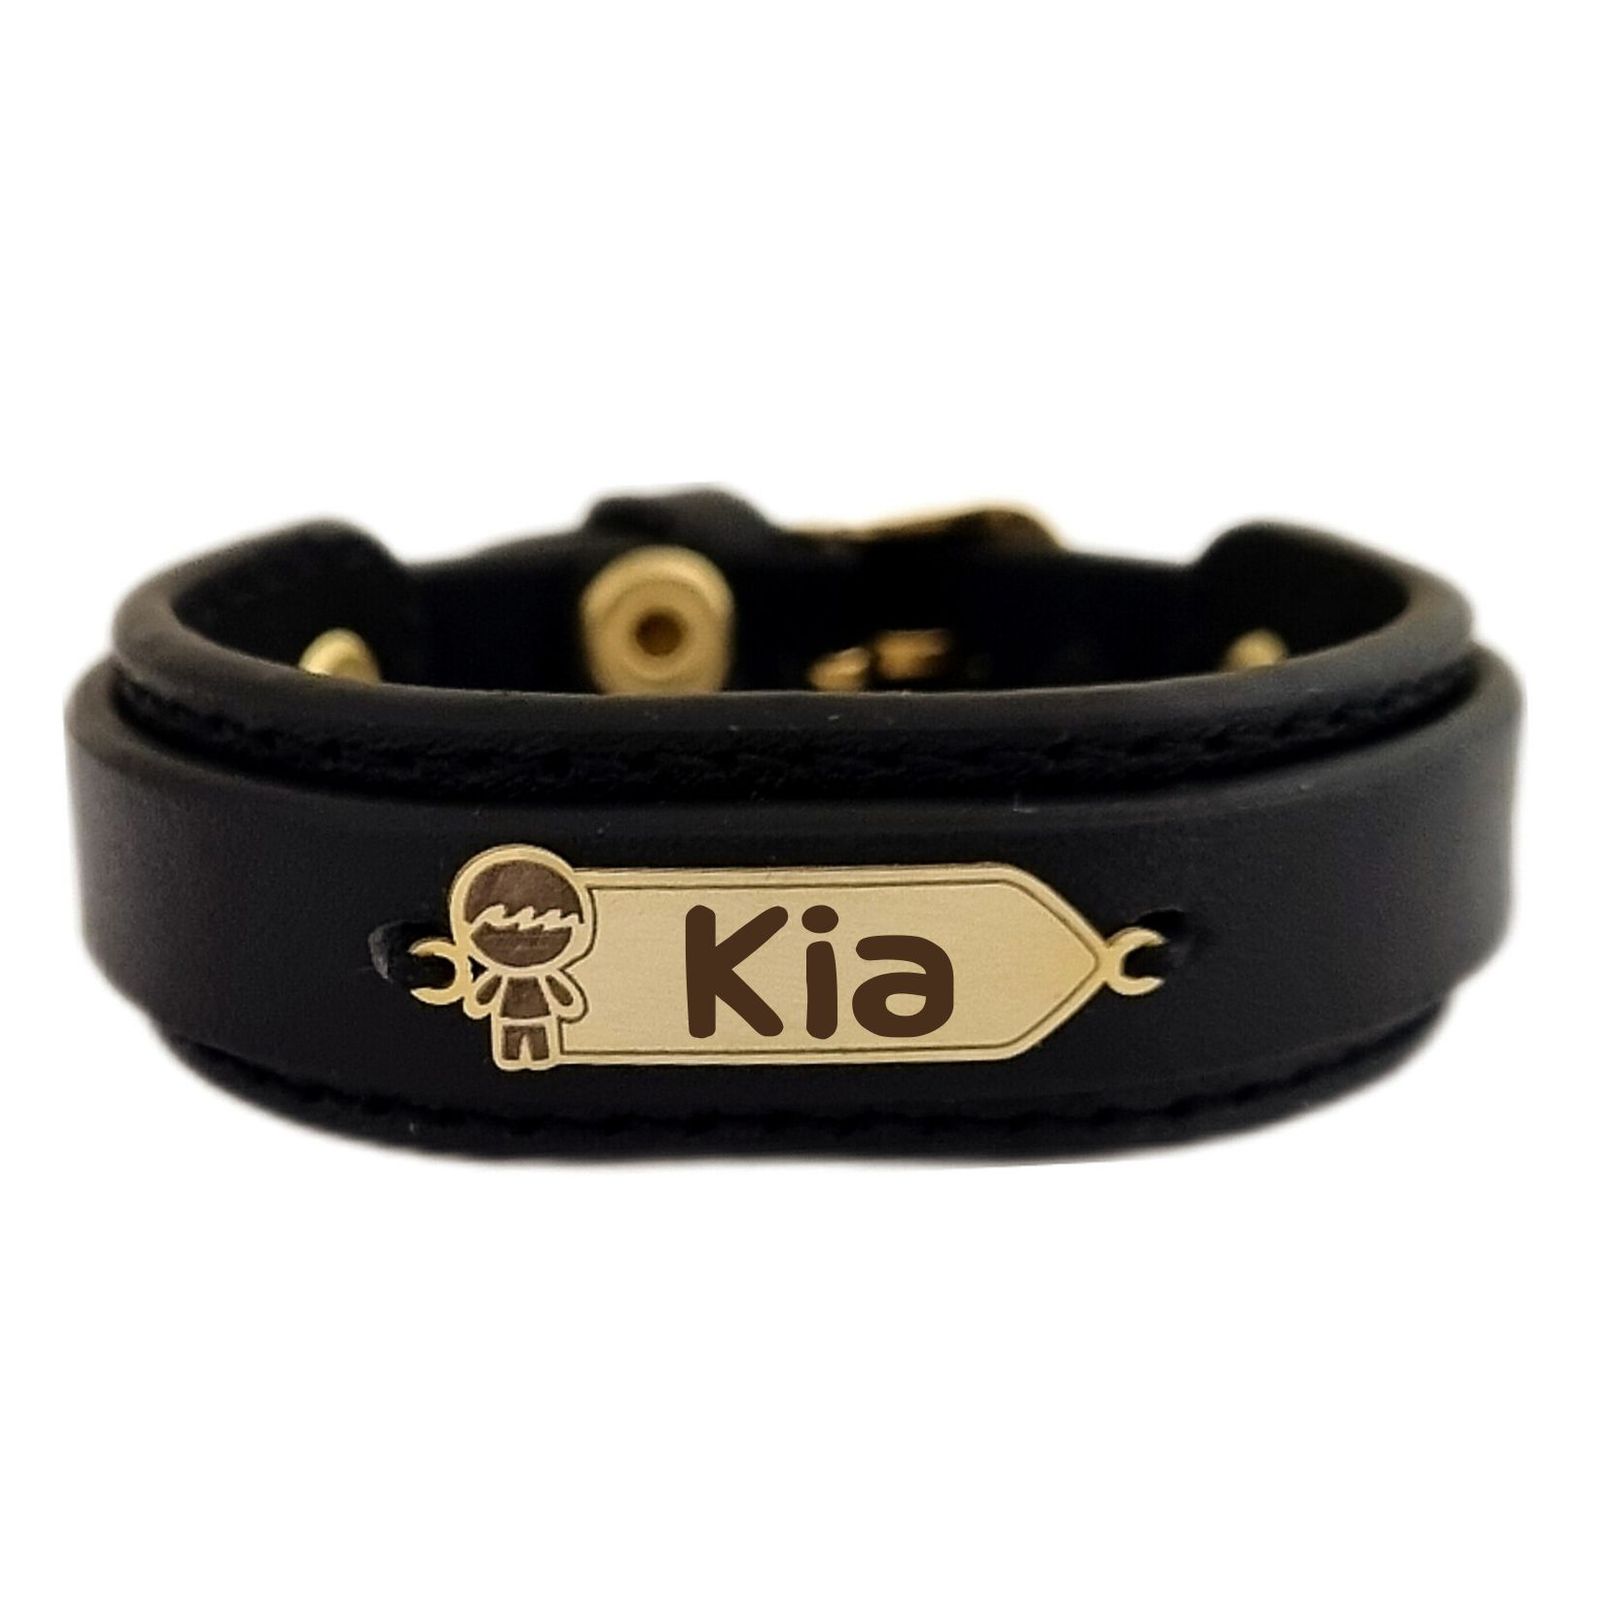 دستبند طلا 18 عیار بچگانه لیردا مدل اسم کیا  KDK -  - 1